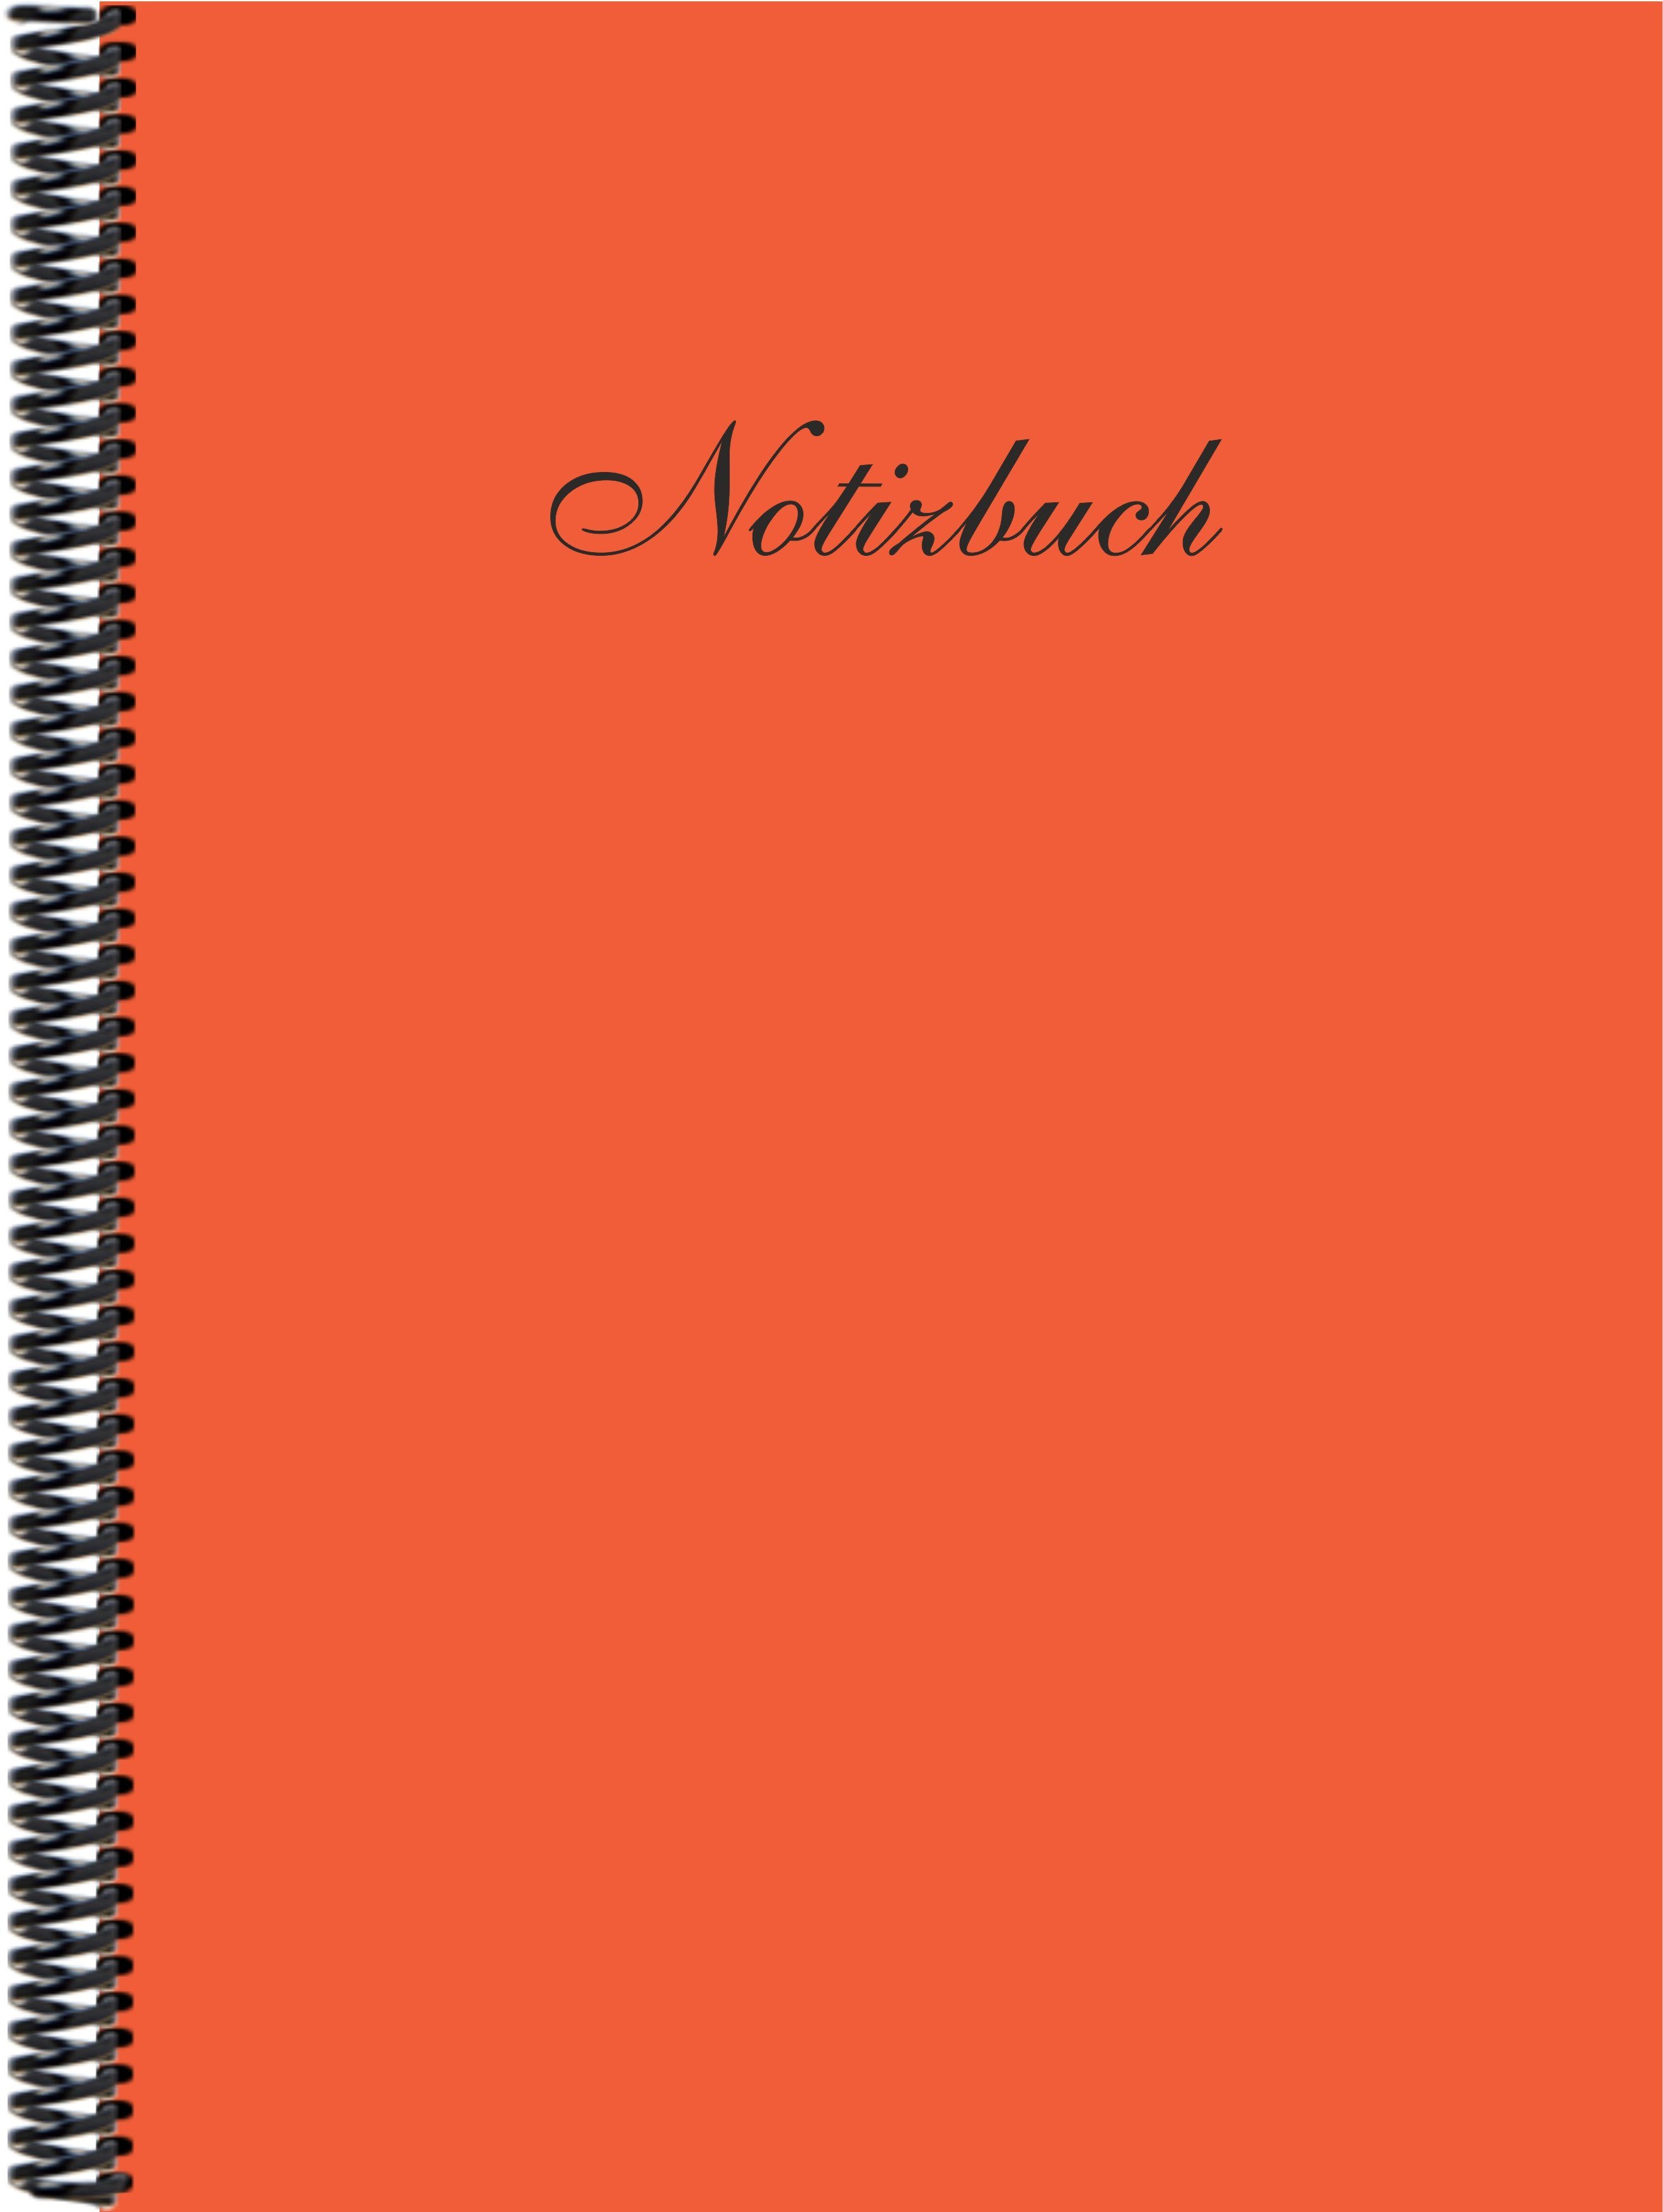 kariert, Gmbh Trendfarbe orange E&Z Verlag Notizbuch DINA4 Notizbuch in der